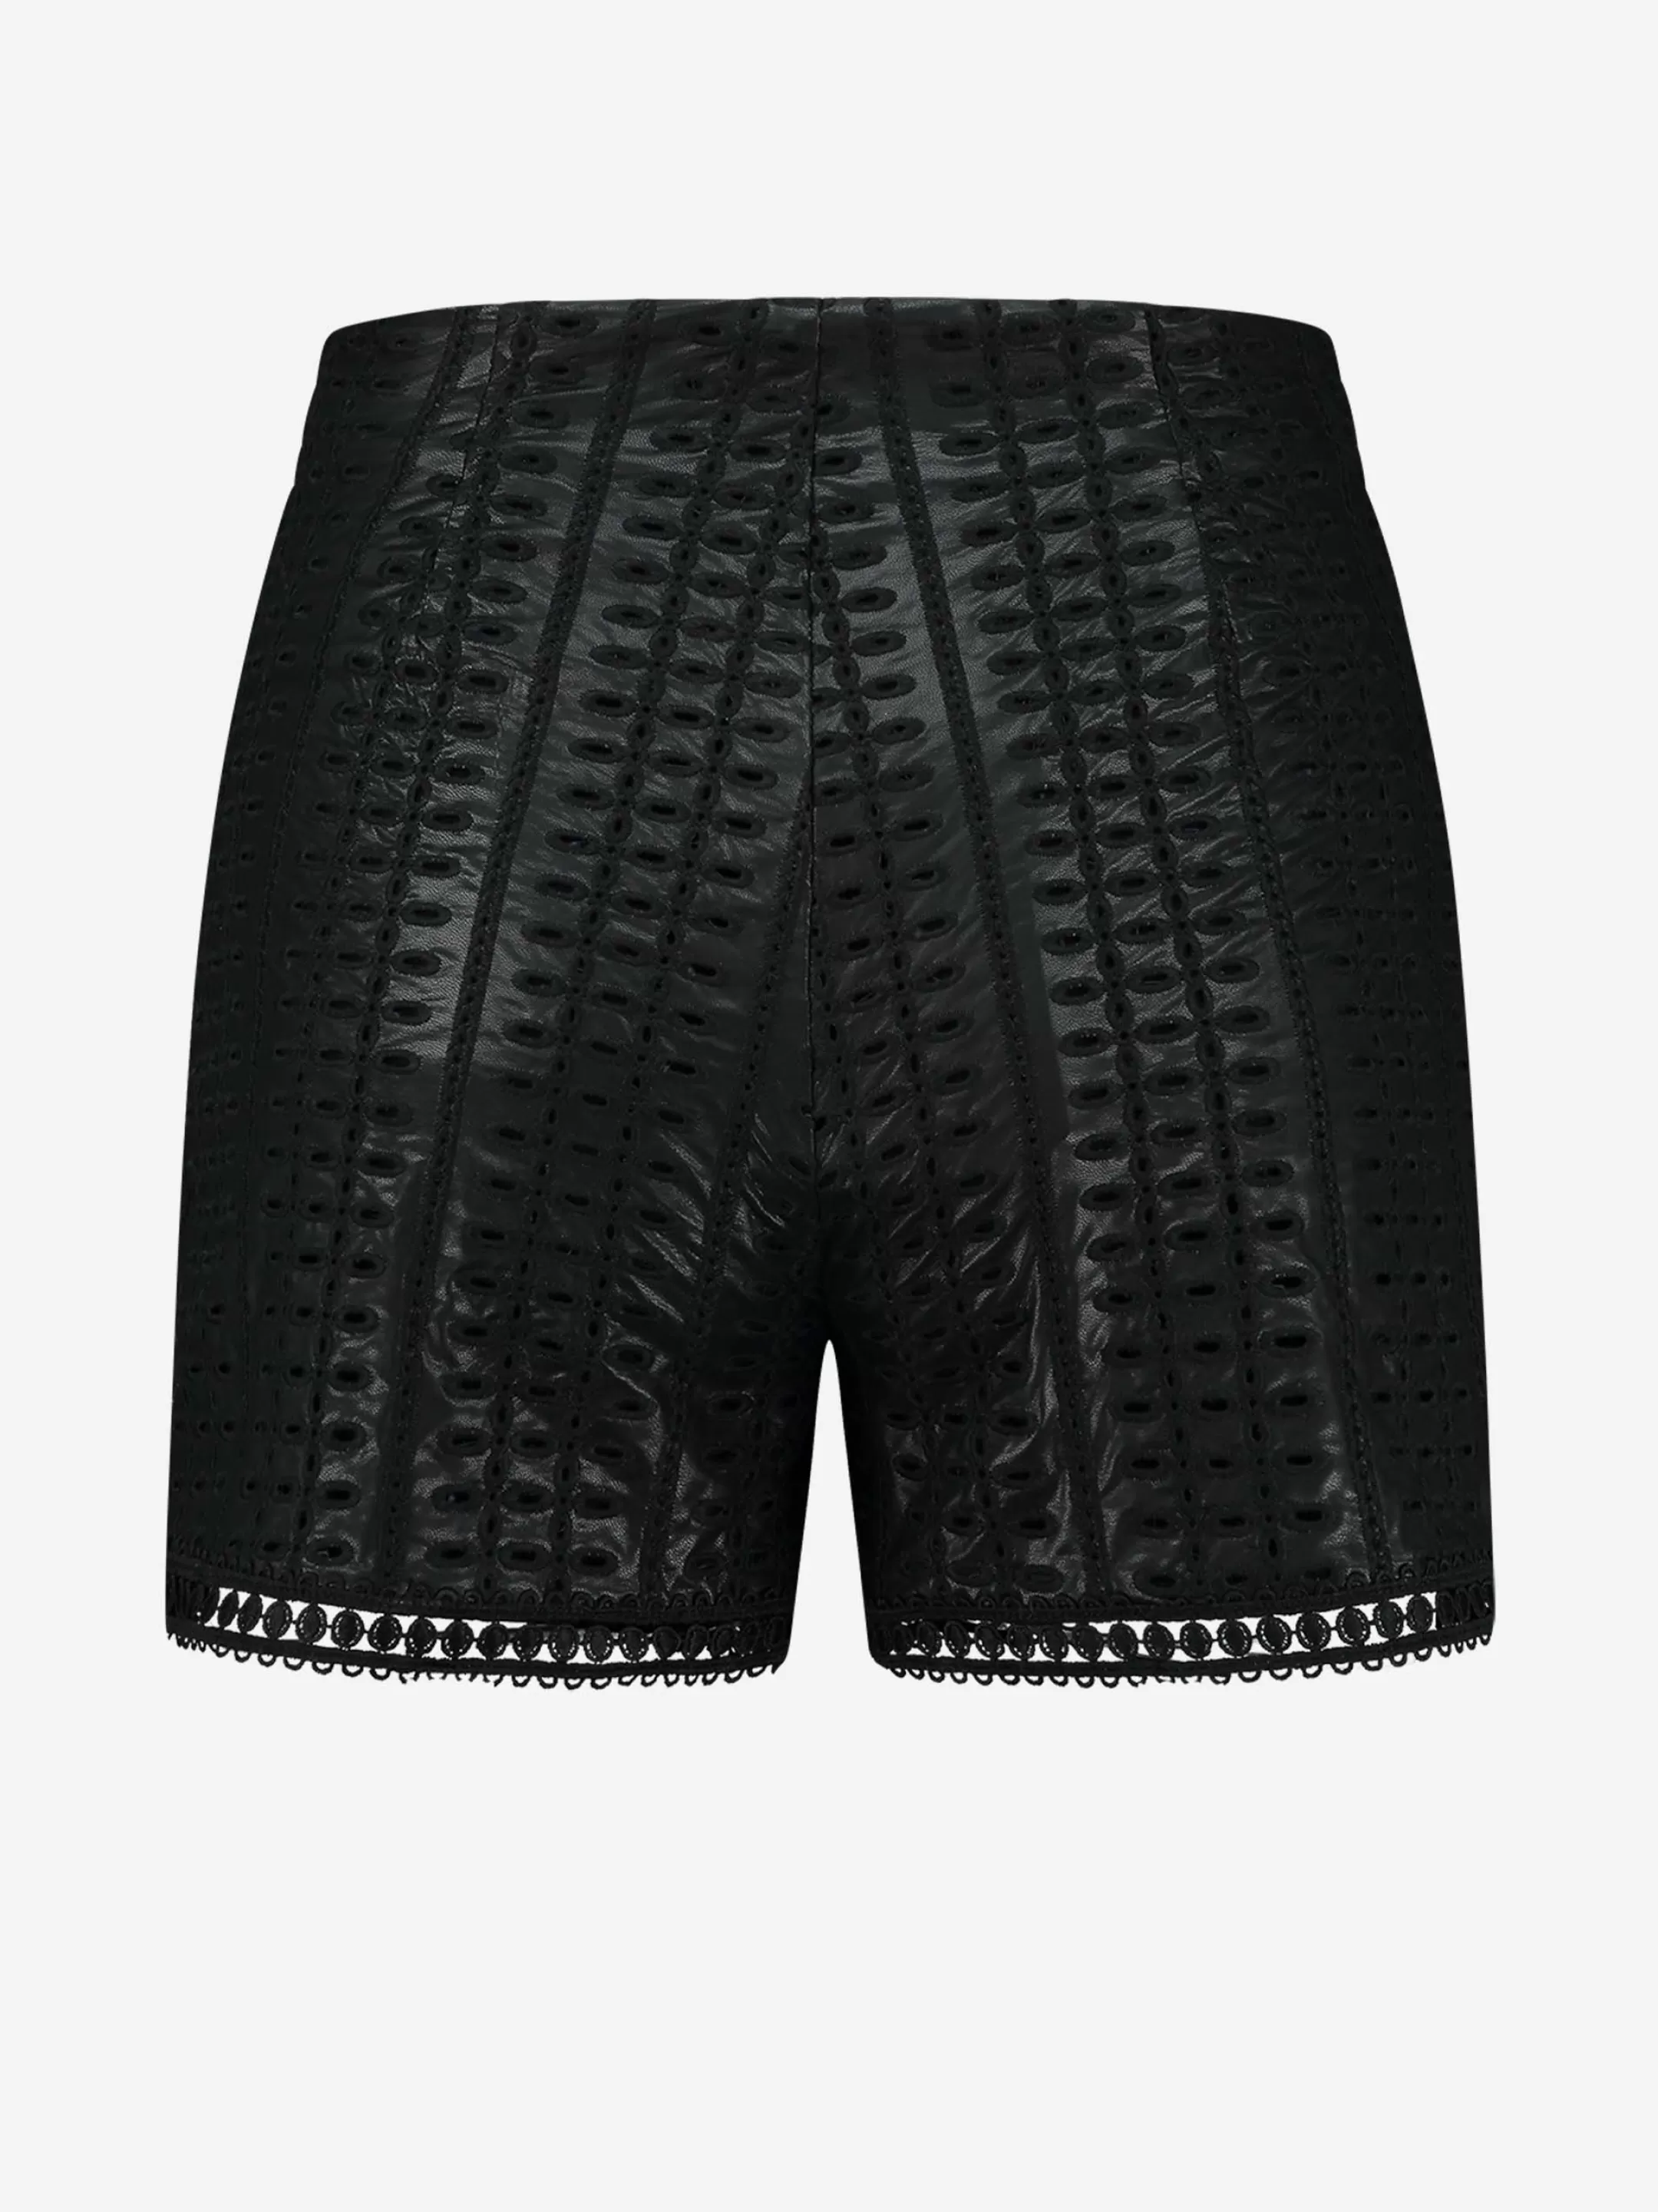 Hot HIGH RISE VEGAN LEREN SHORTS MET RITSSLUITING Shorts | Selected by Kate Moss